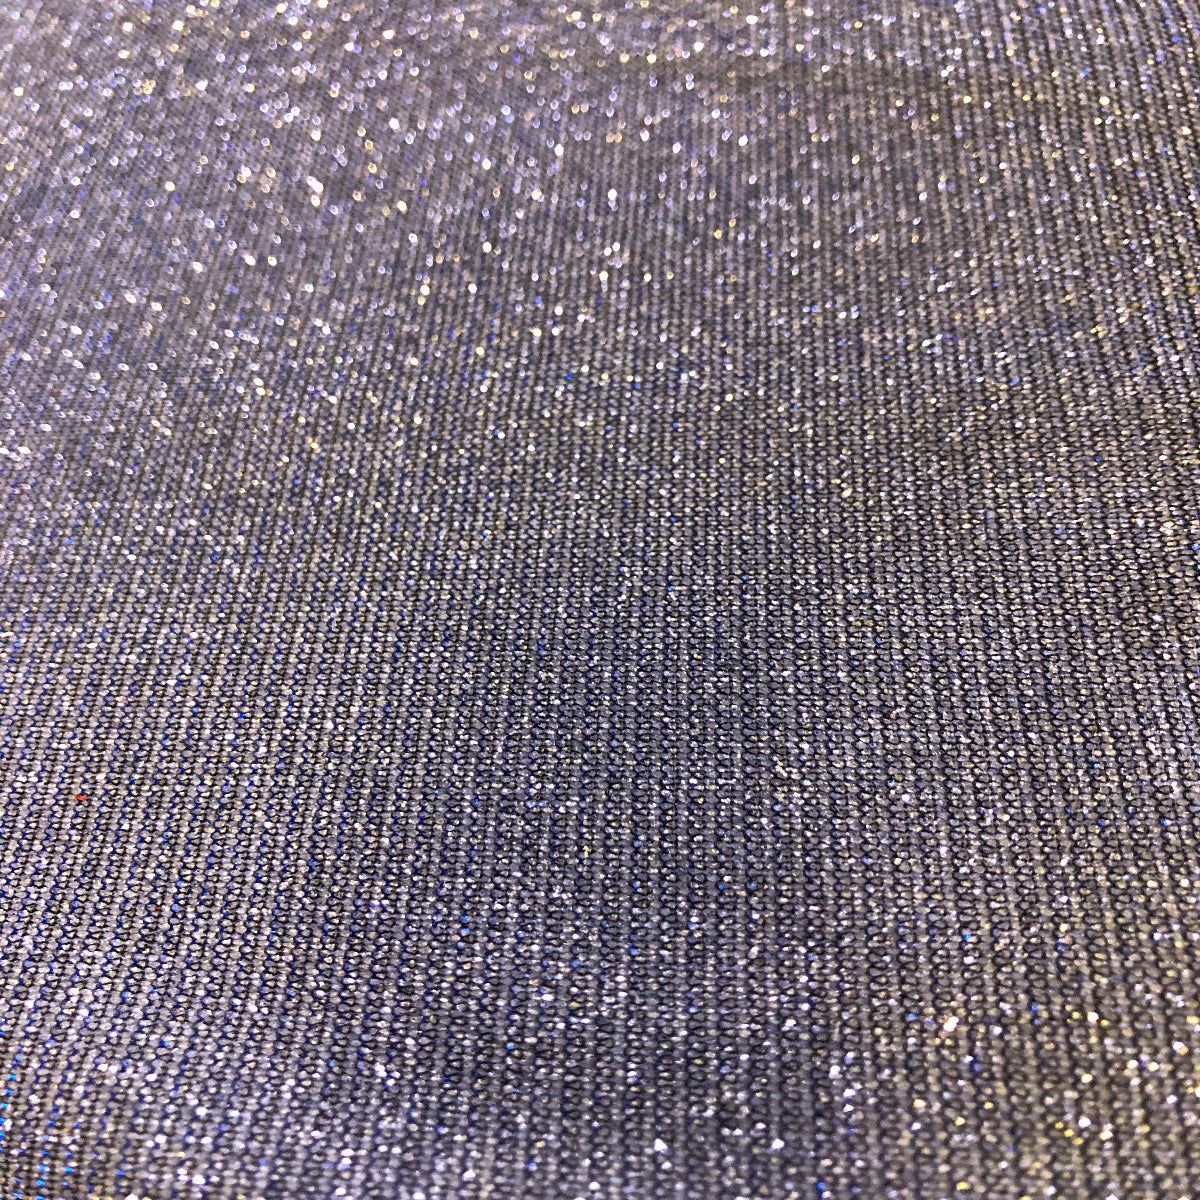 Silver Black Metallic stretch Spandex Fabric By the Yard 48 Wide